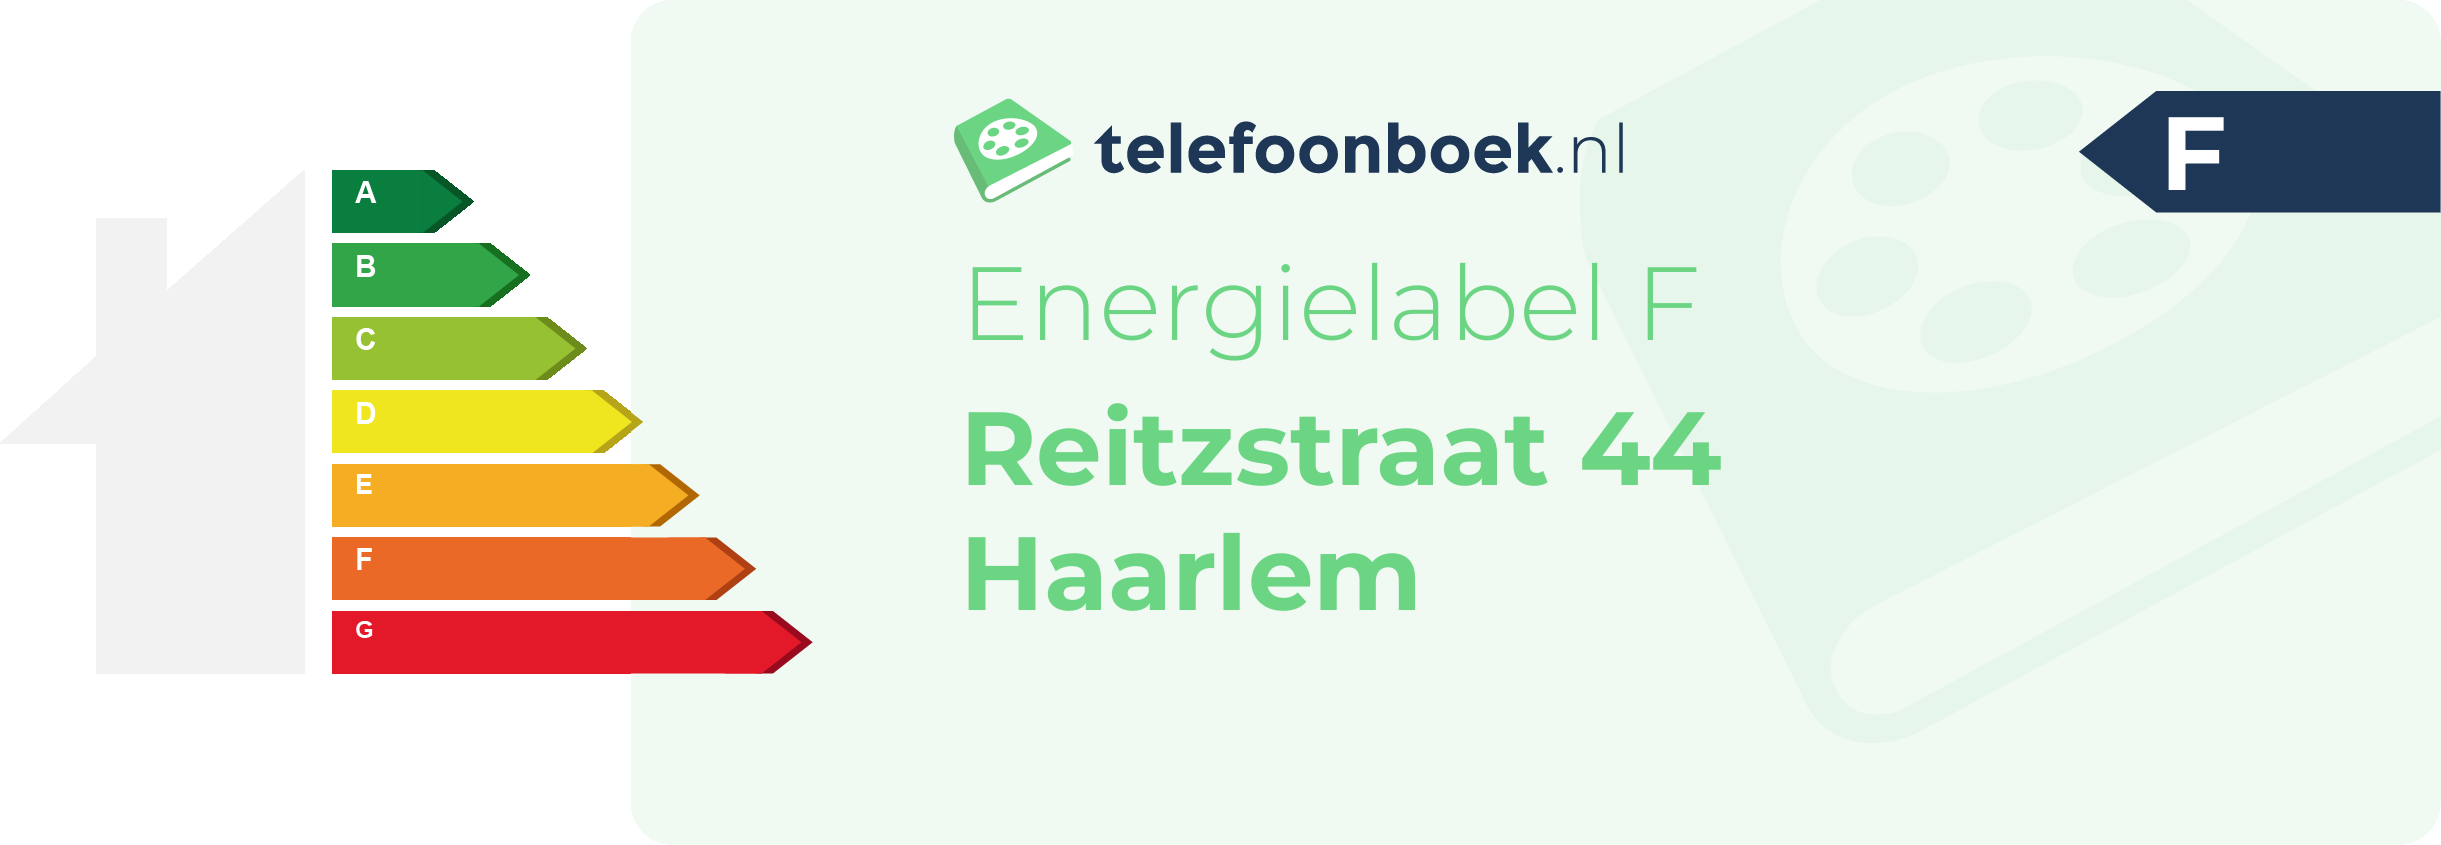 Energielabel Reitzstraat 44 Haarlem